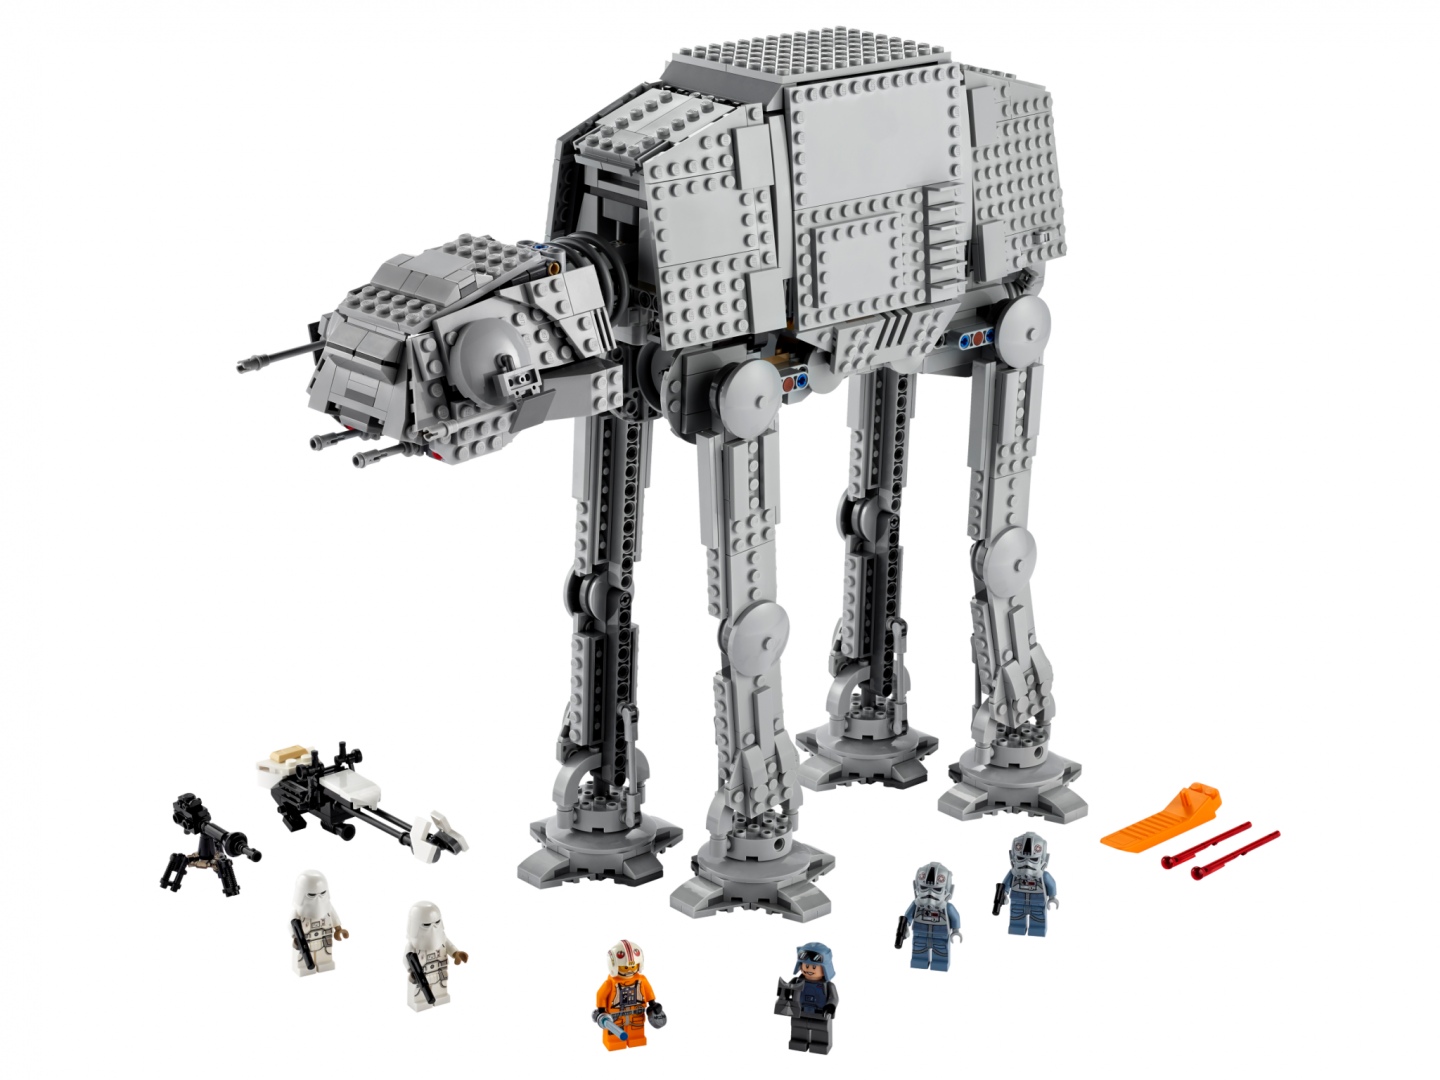 Joc set de constructie LEGO® Star Wars™ - AT-AT™ Vehicul blindat LEGO75288, peste 1000 piese, 6 figurine, 10+